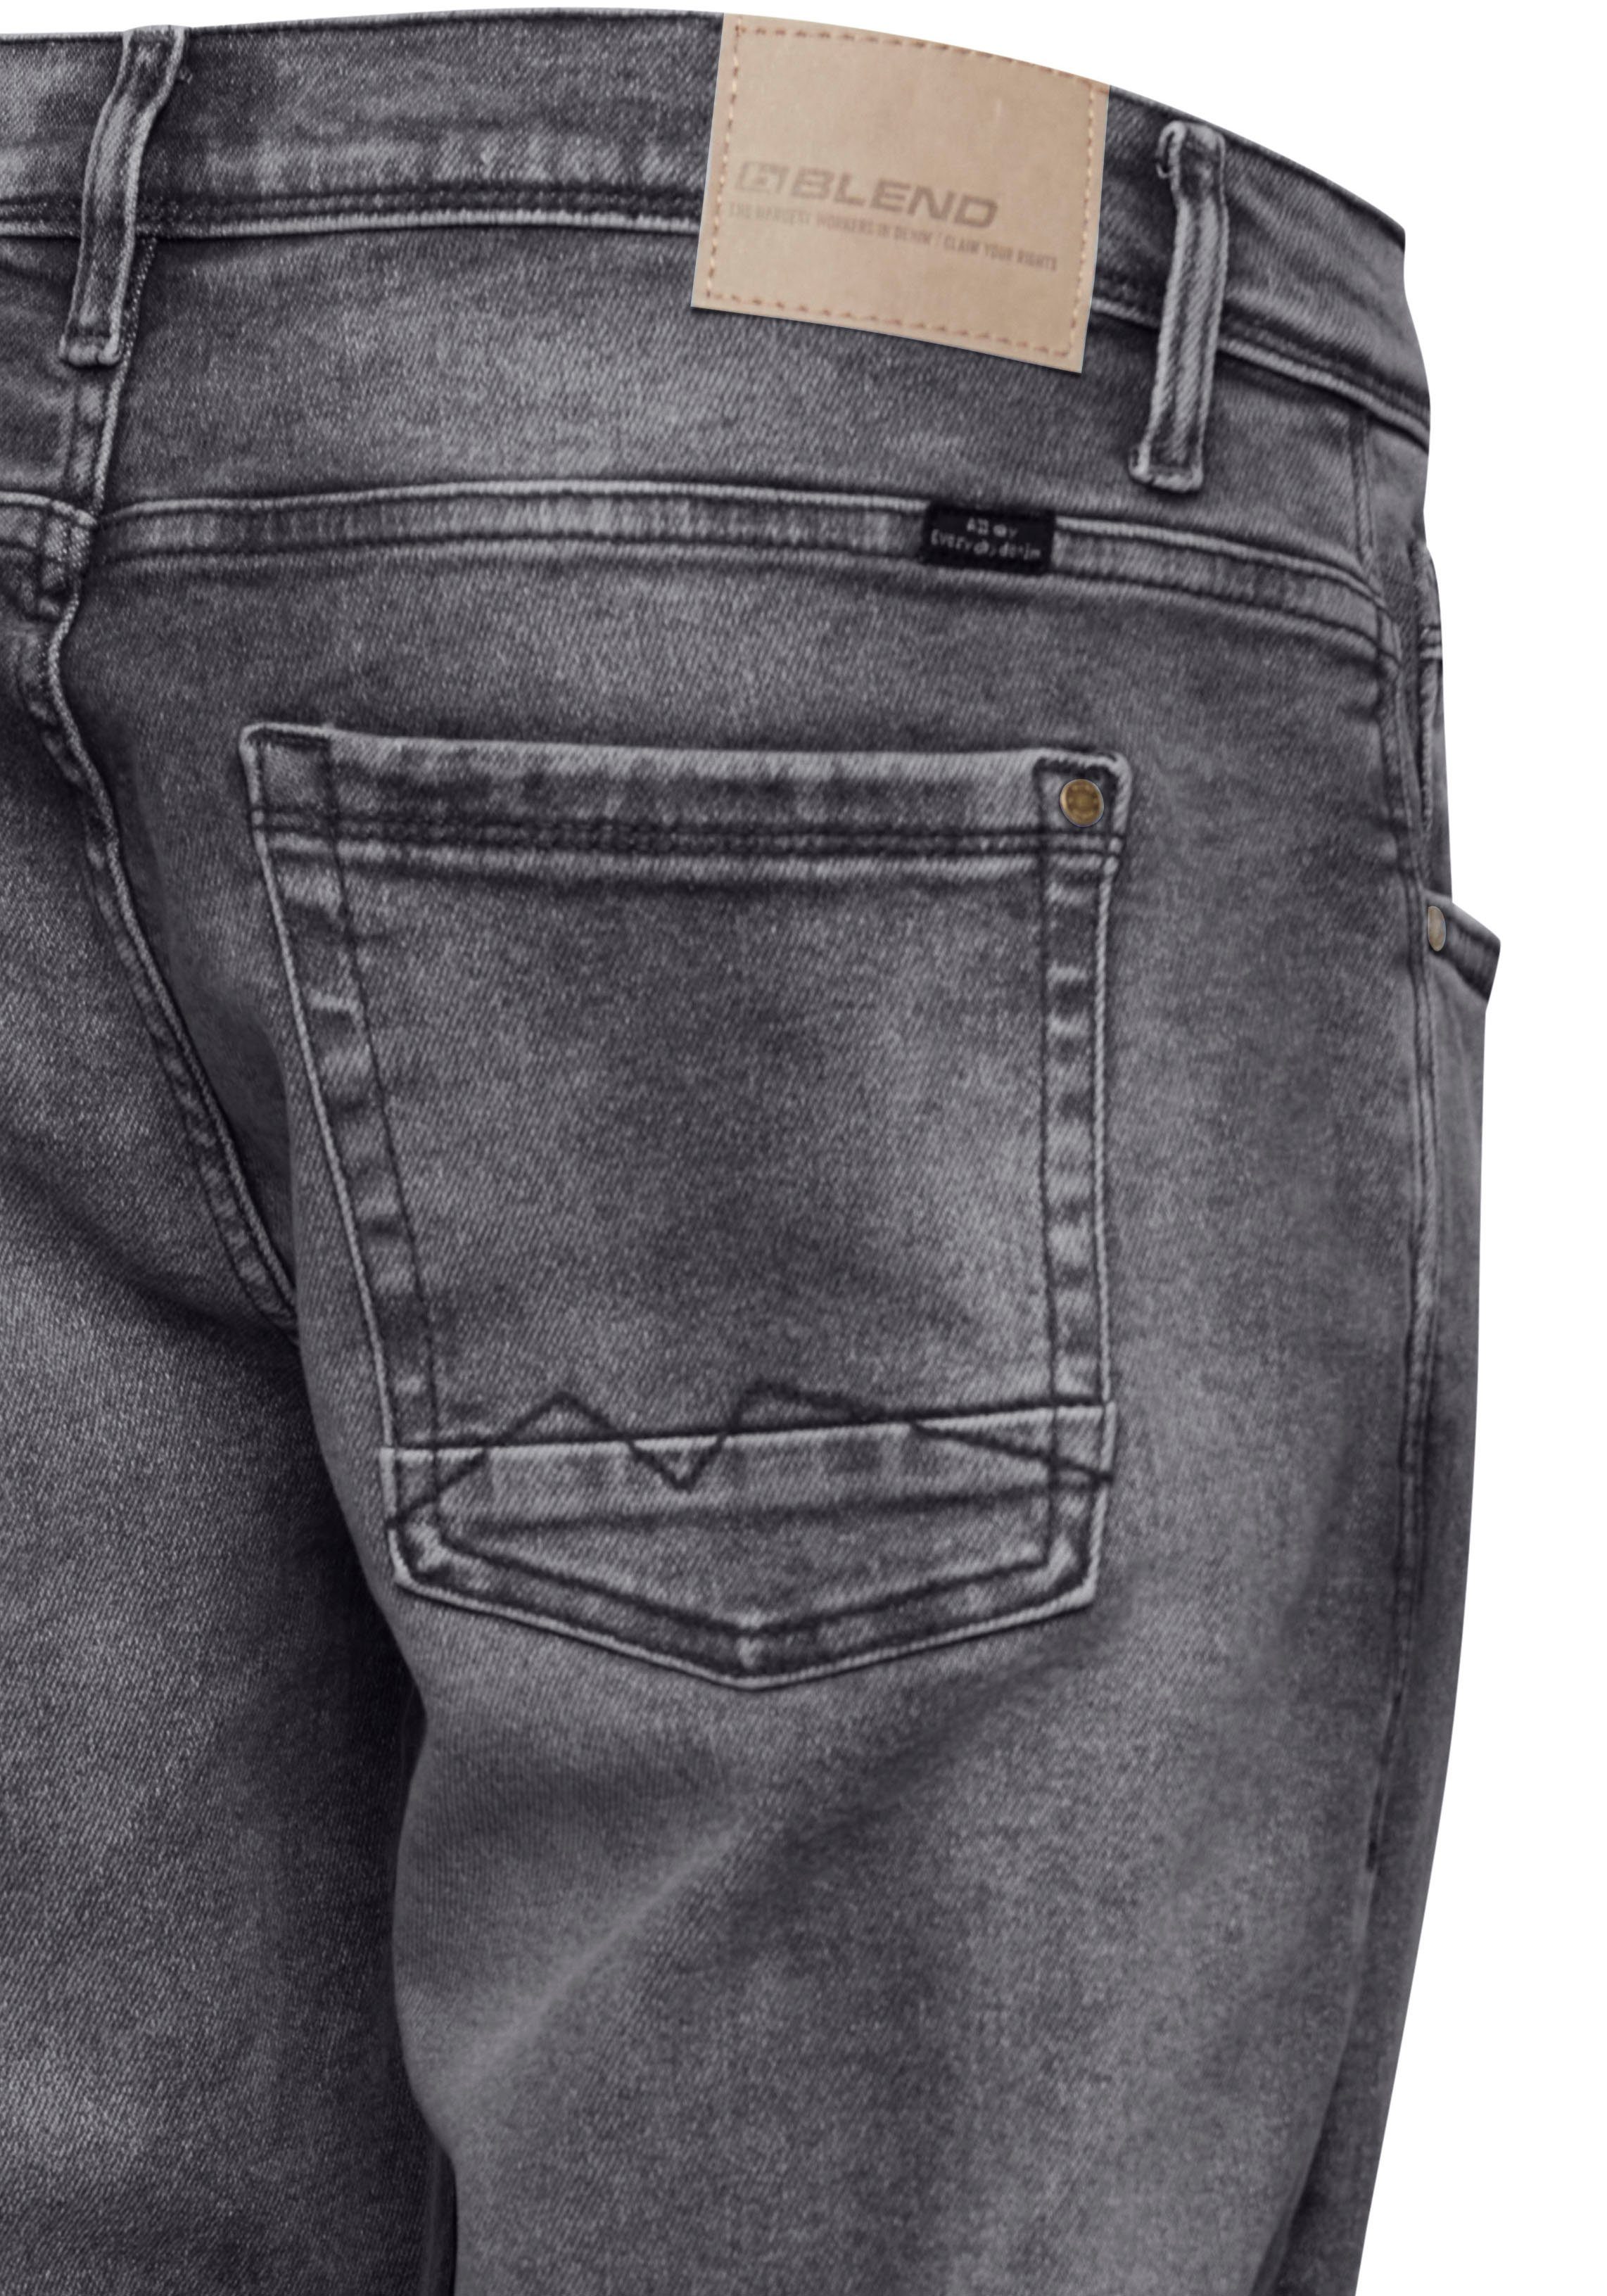 Blend 5-Pocket-Jeans BL grey Blizzard Jeans Multiflex